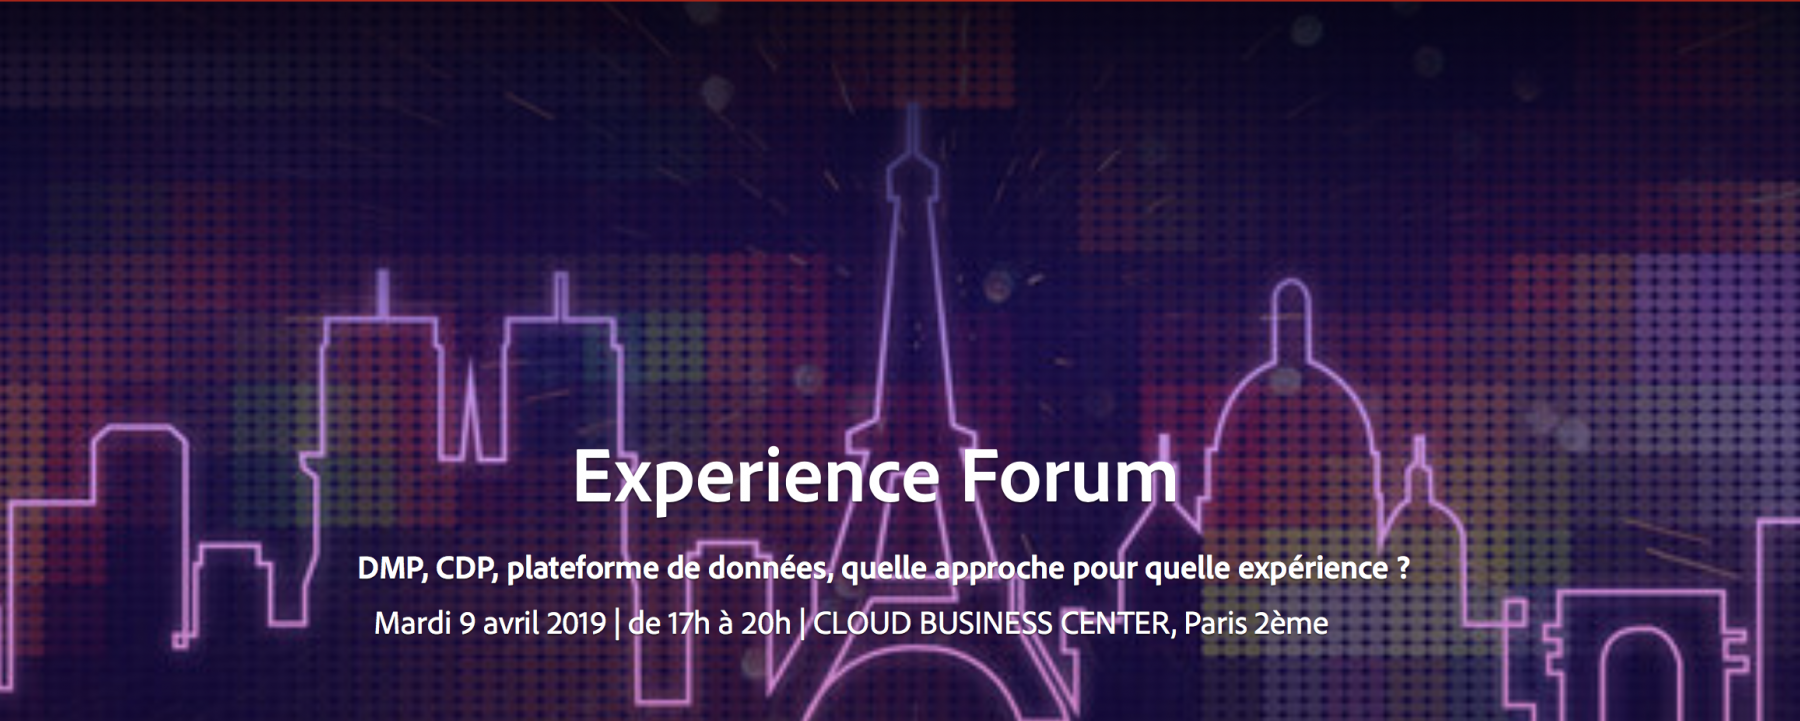 adobe-experience-forum.jpg